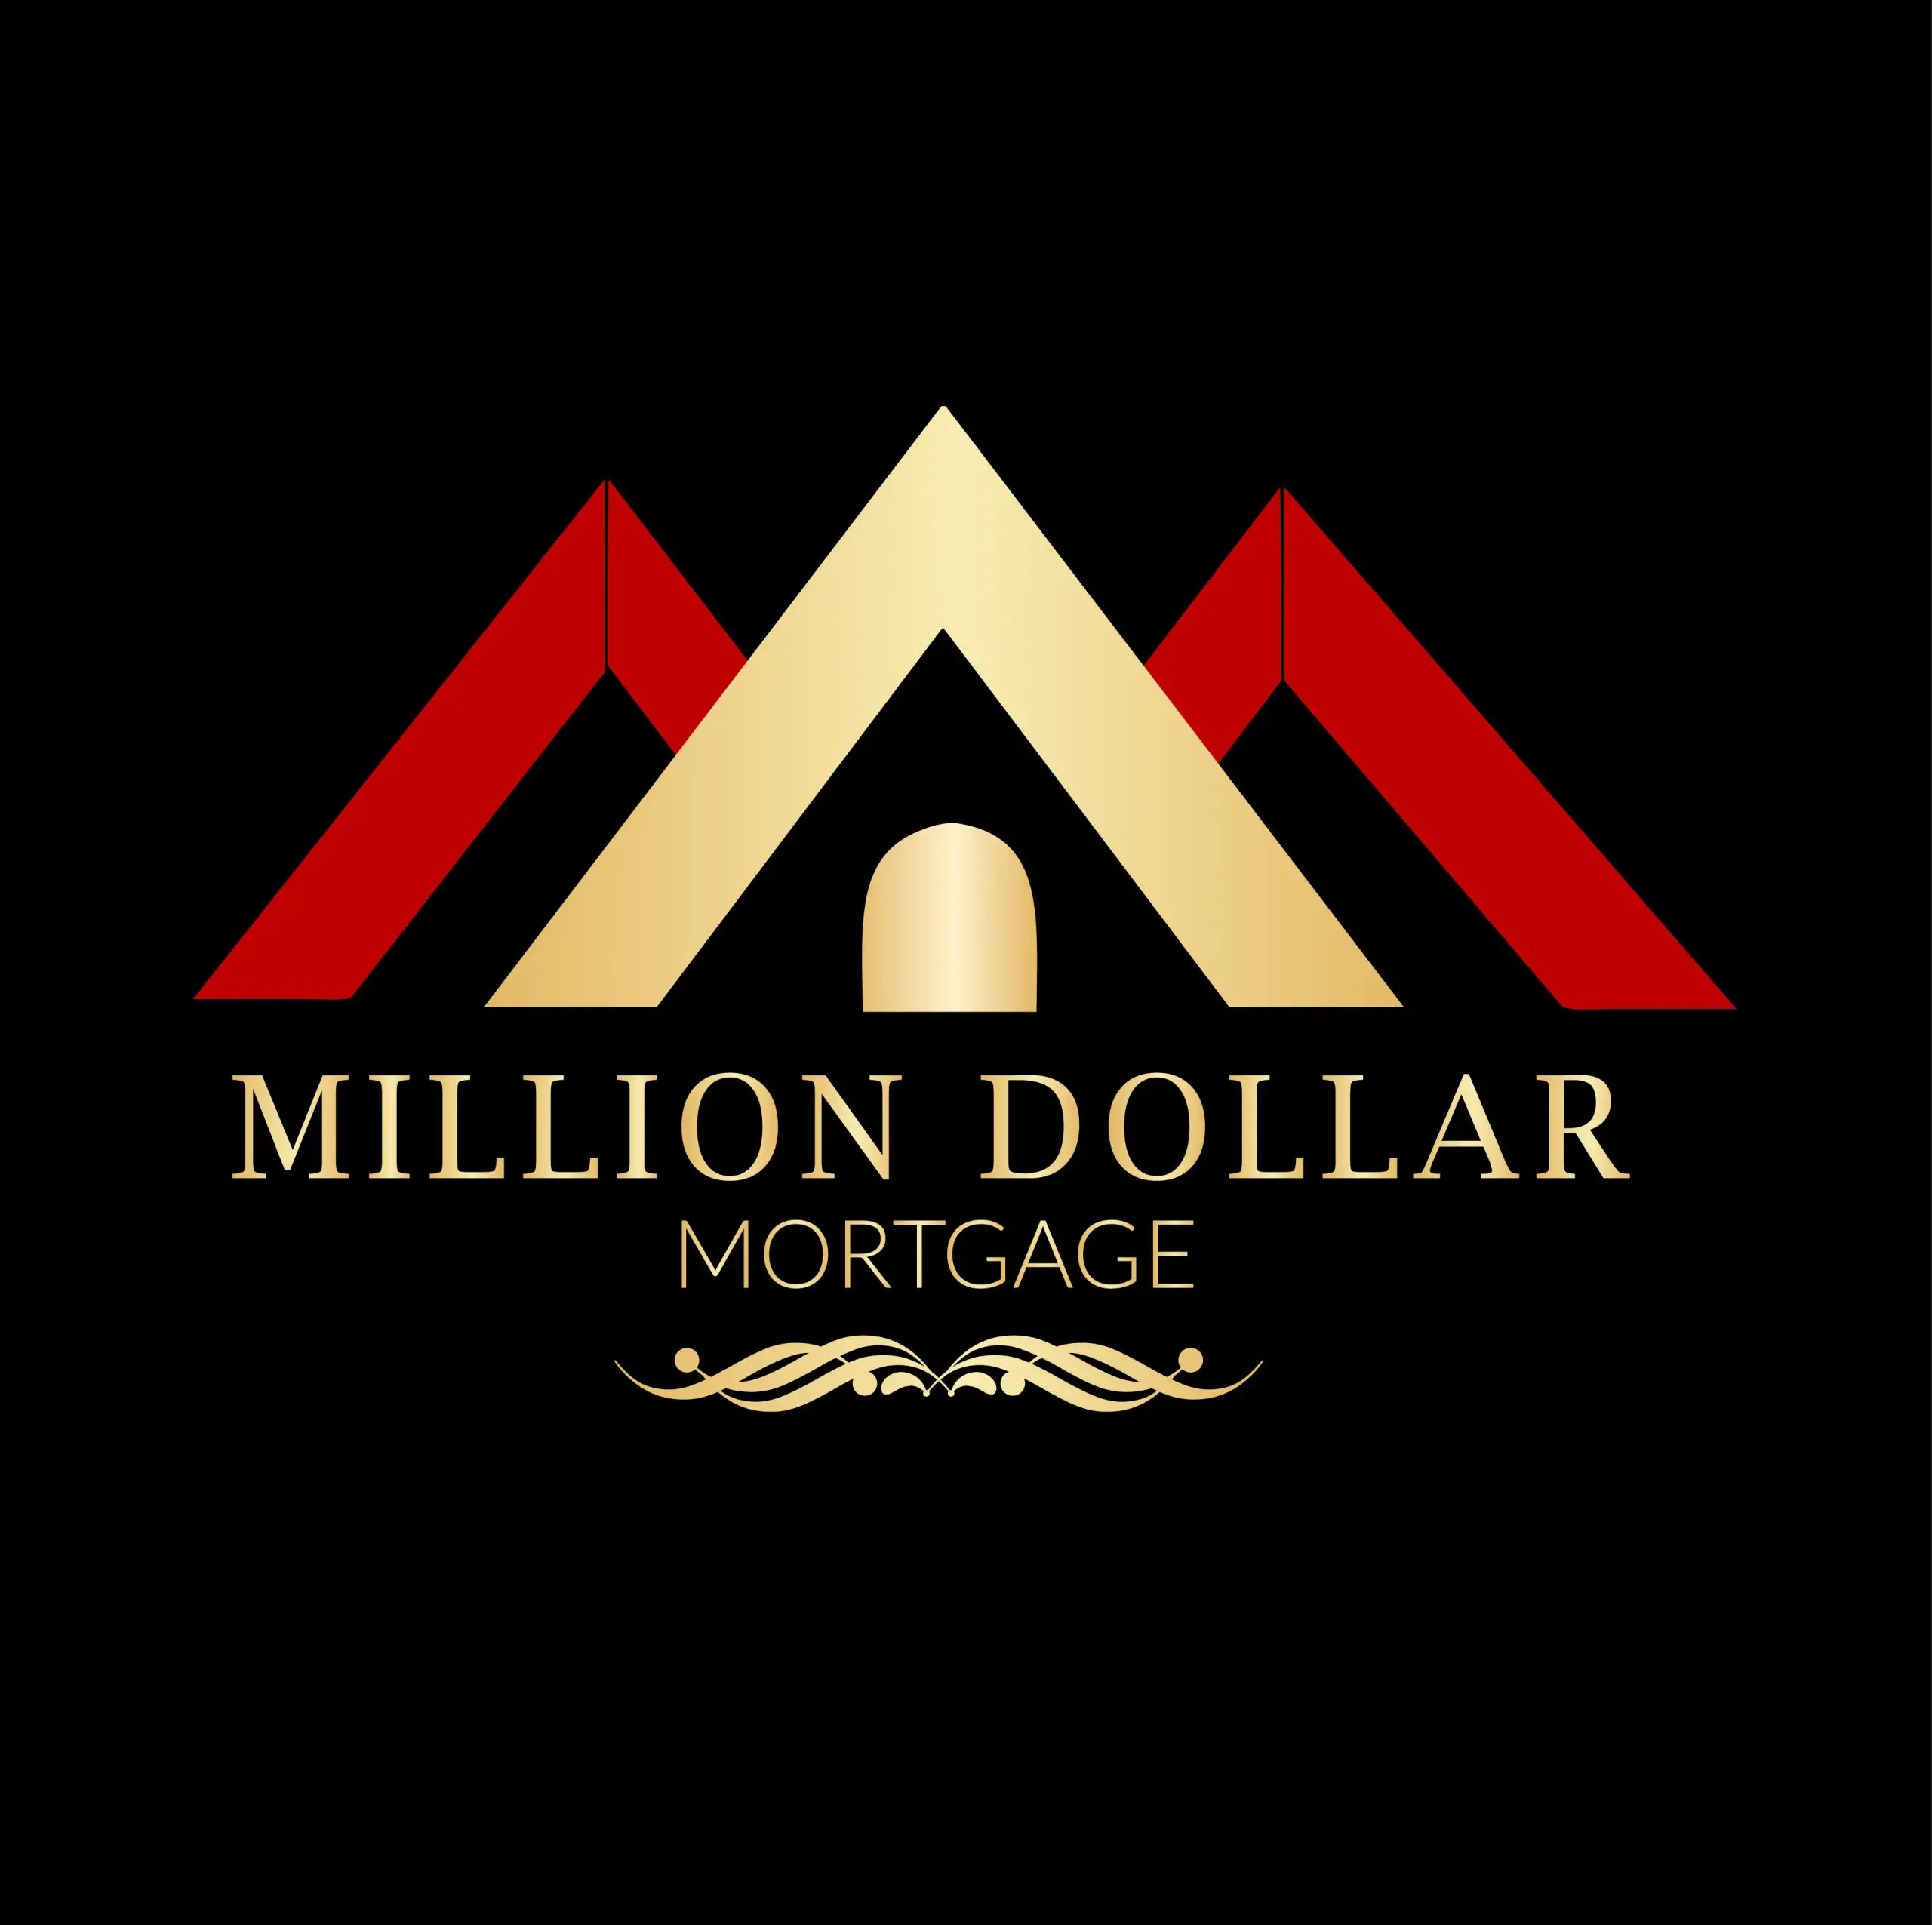 Million Dollar Mortgage